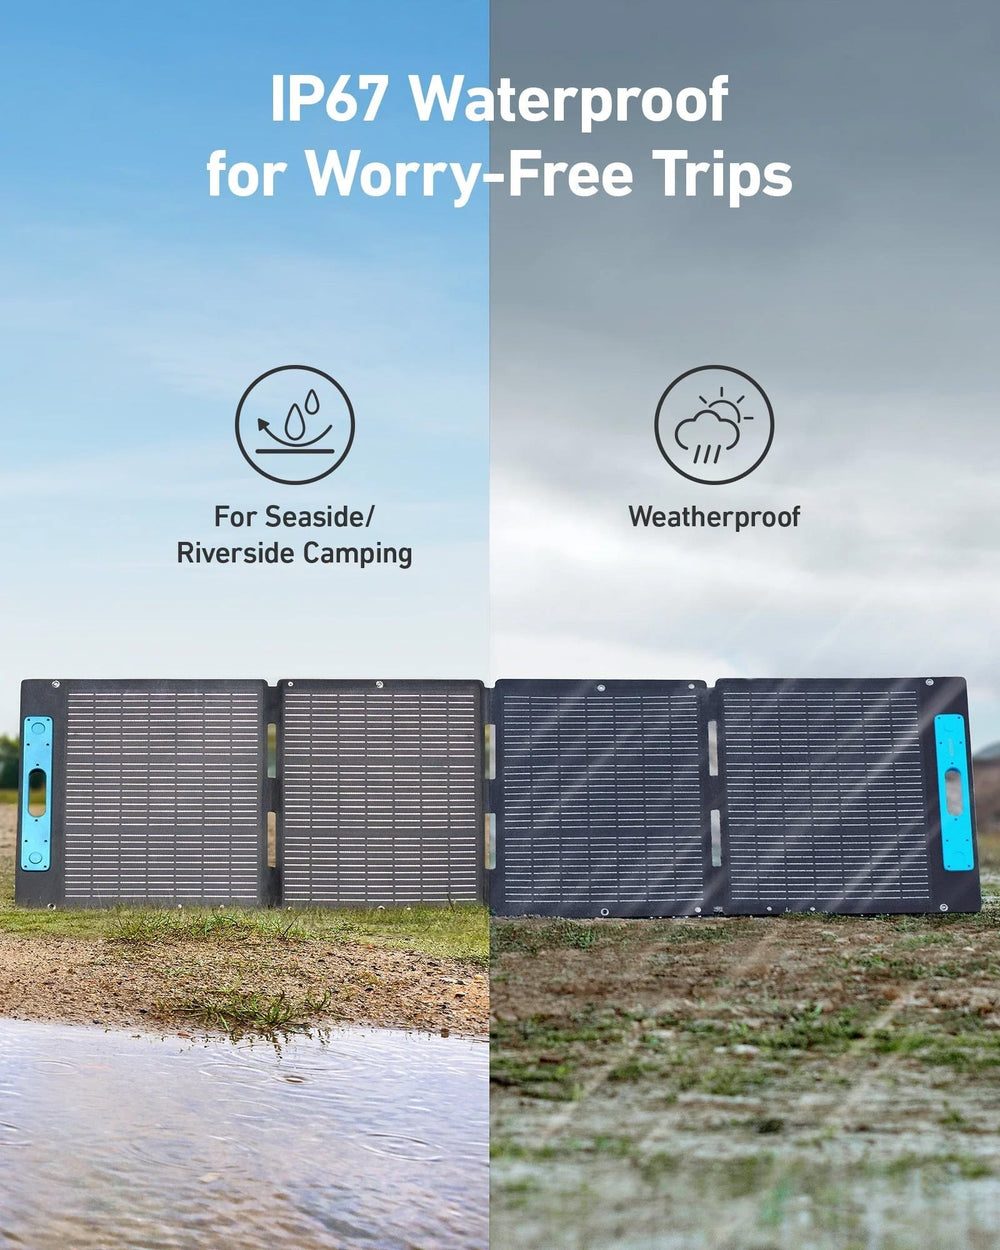 IB67 Waterproof for Worry-Free Trips